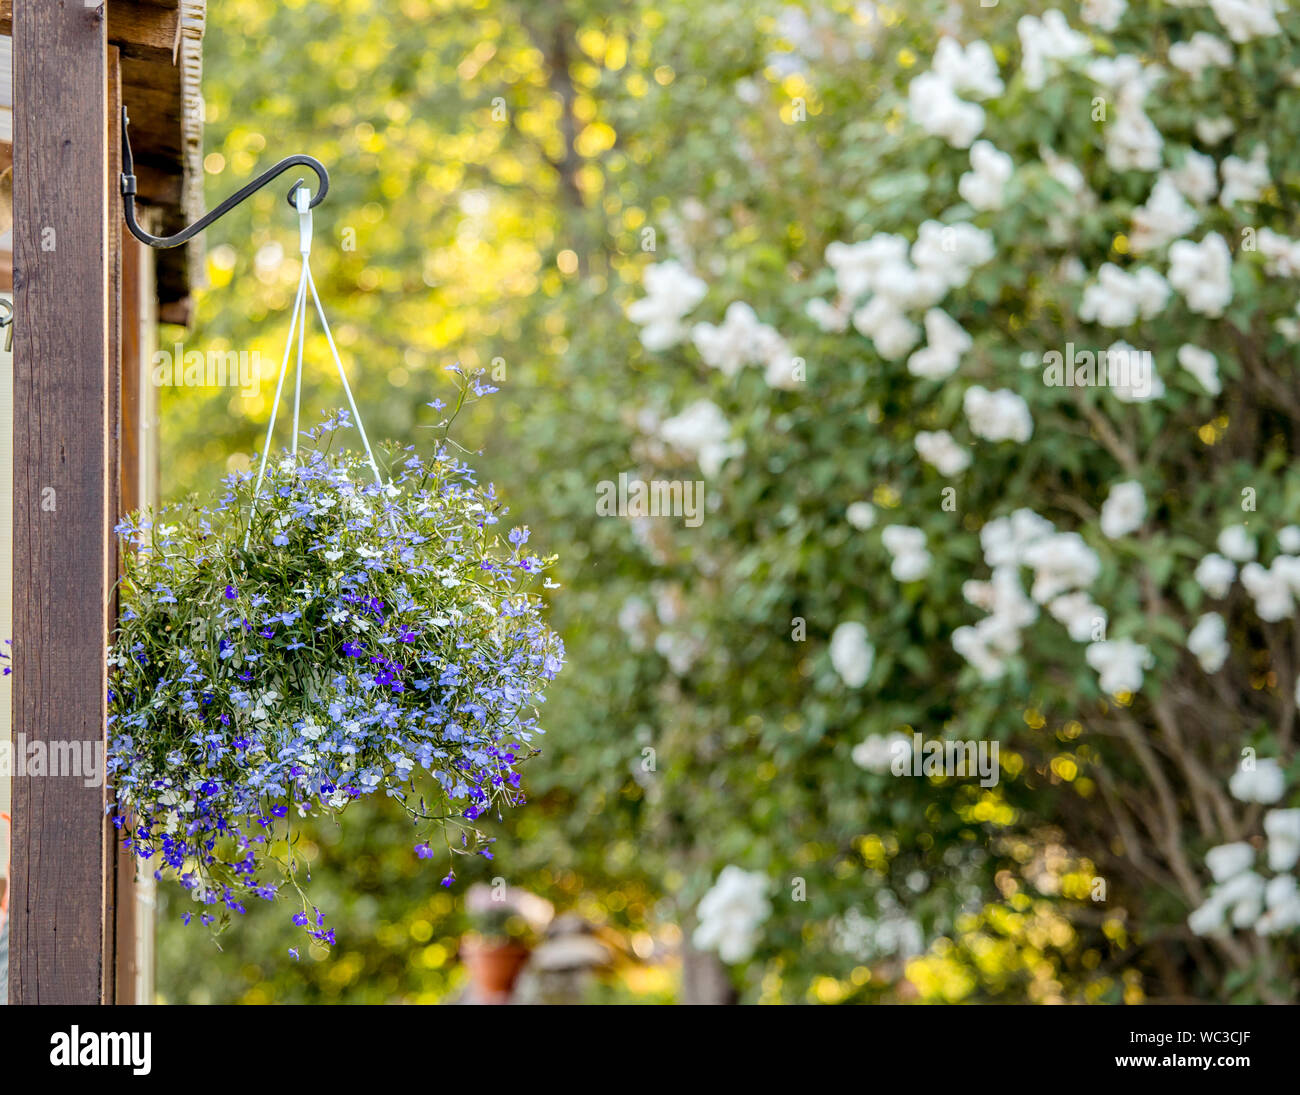 Lobelia erinus flower (edging lobelia, garden lobelia or trailing lobelia) hanging on iron wall hanging flower plant pot bracket outdoors in garden in Stock Photo